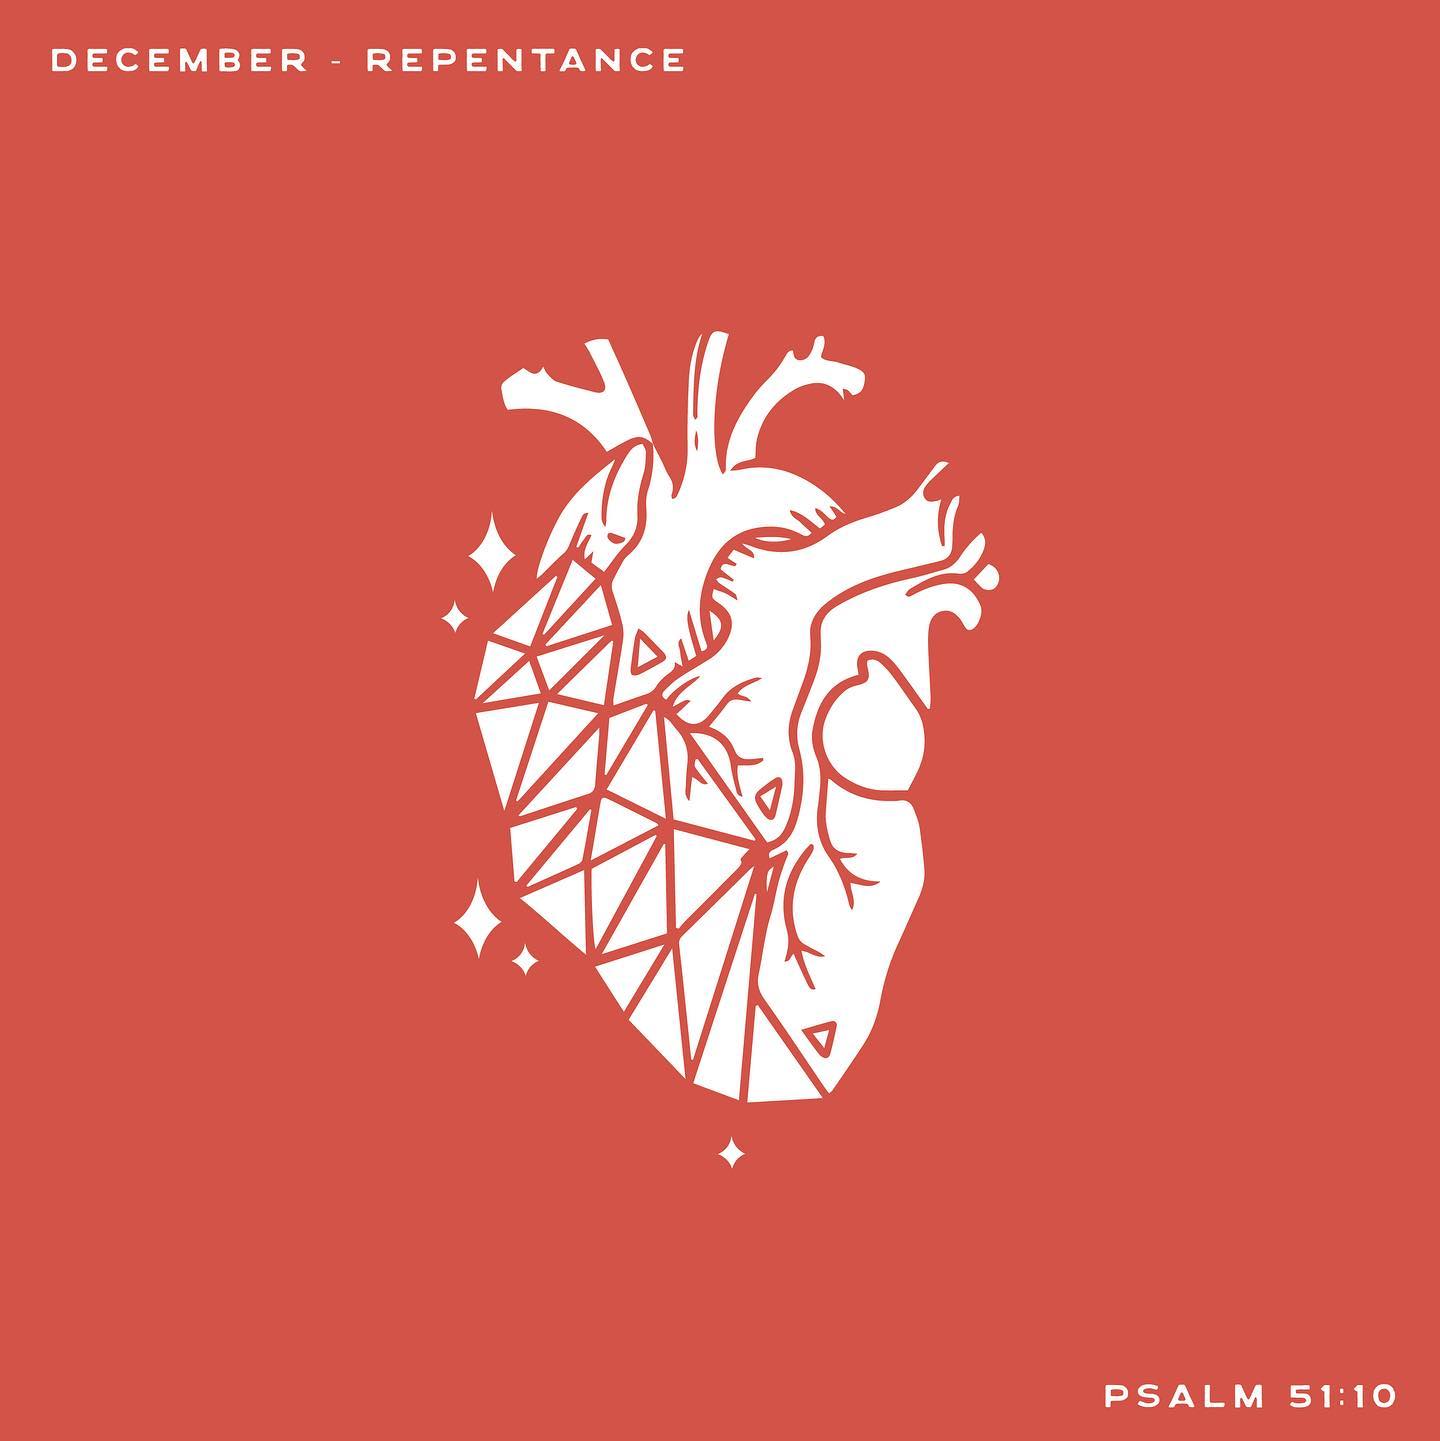 Psalm 51:10 (Repentance - Week 10)